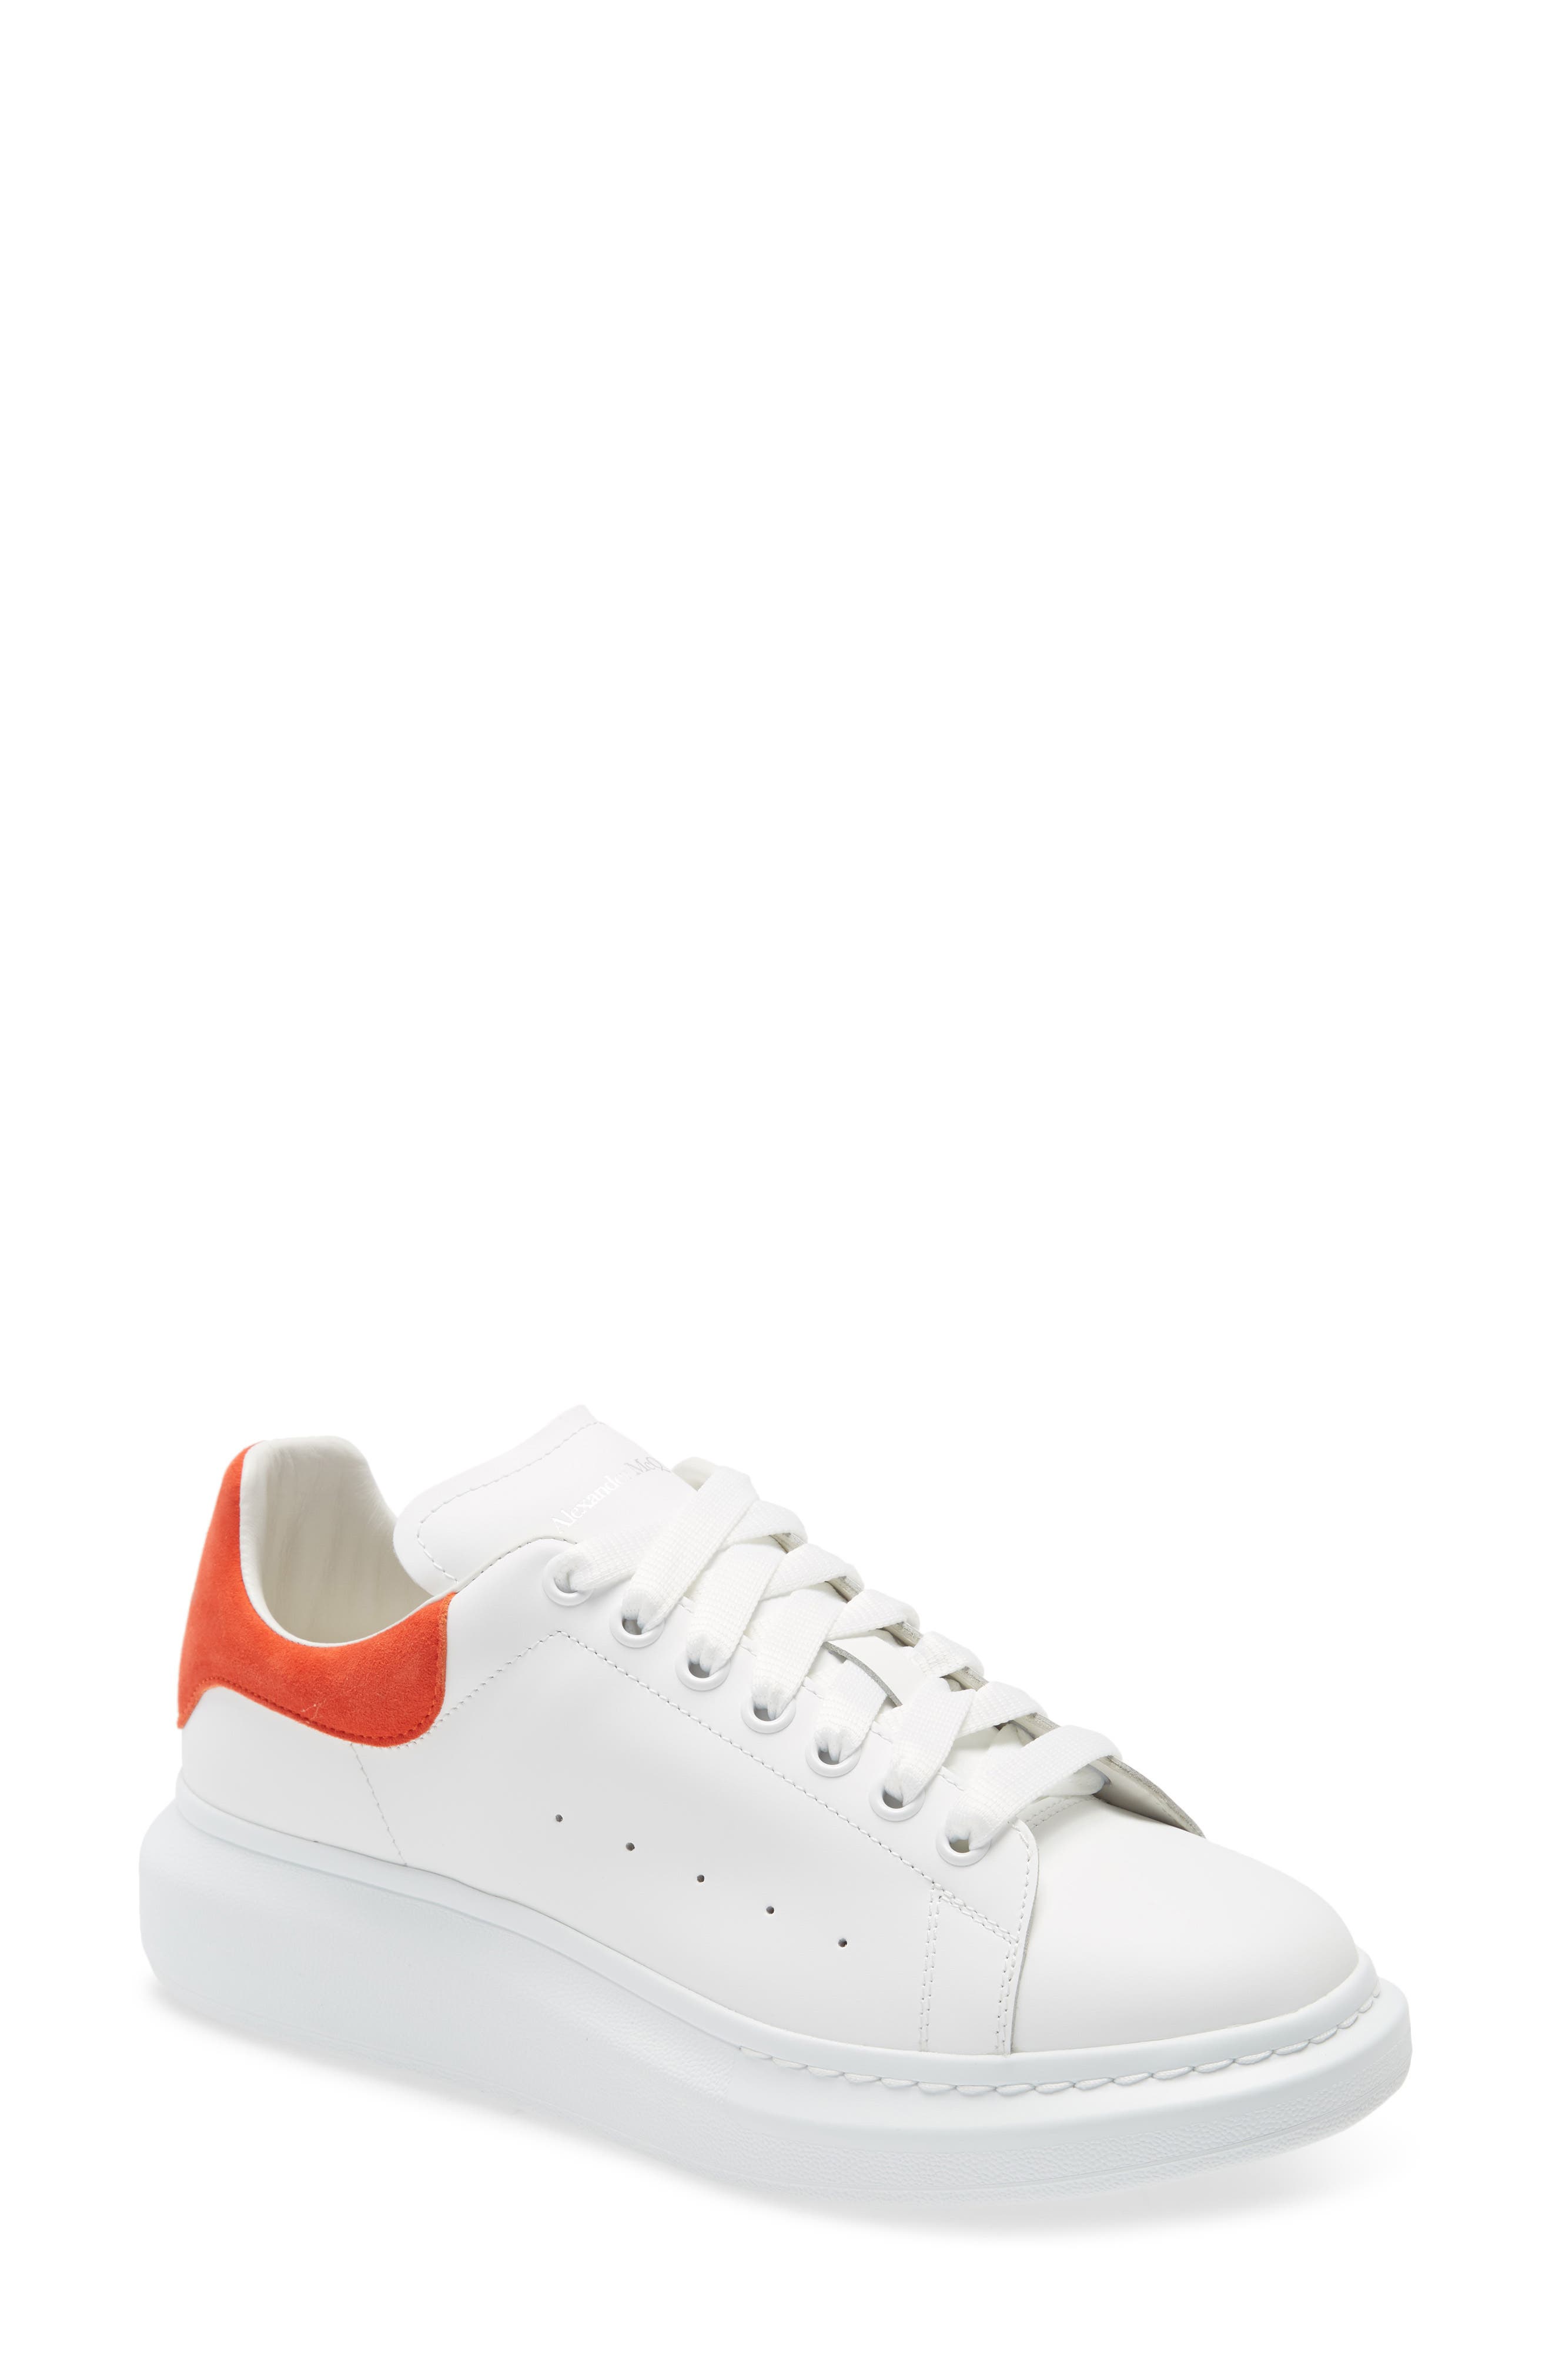 alexander mcqueen sneakers orange and white